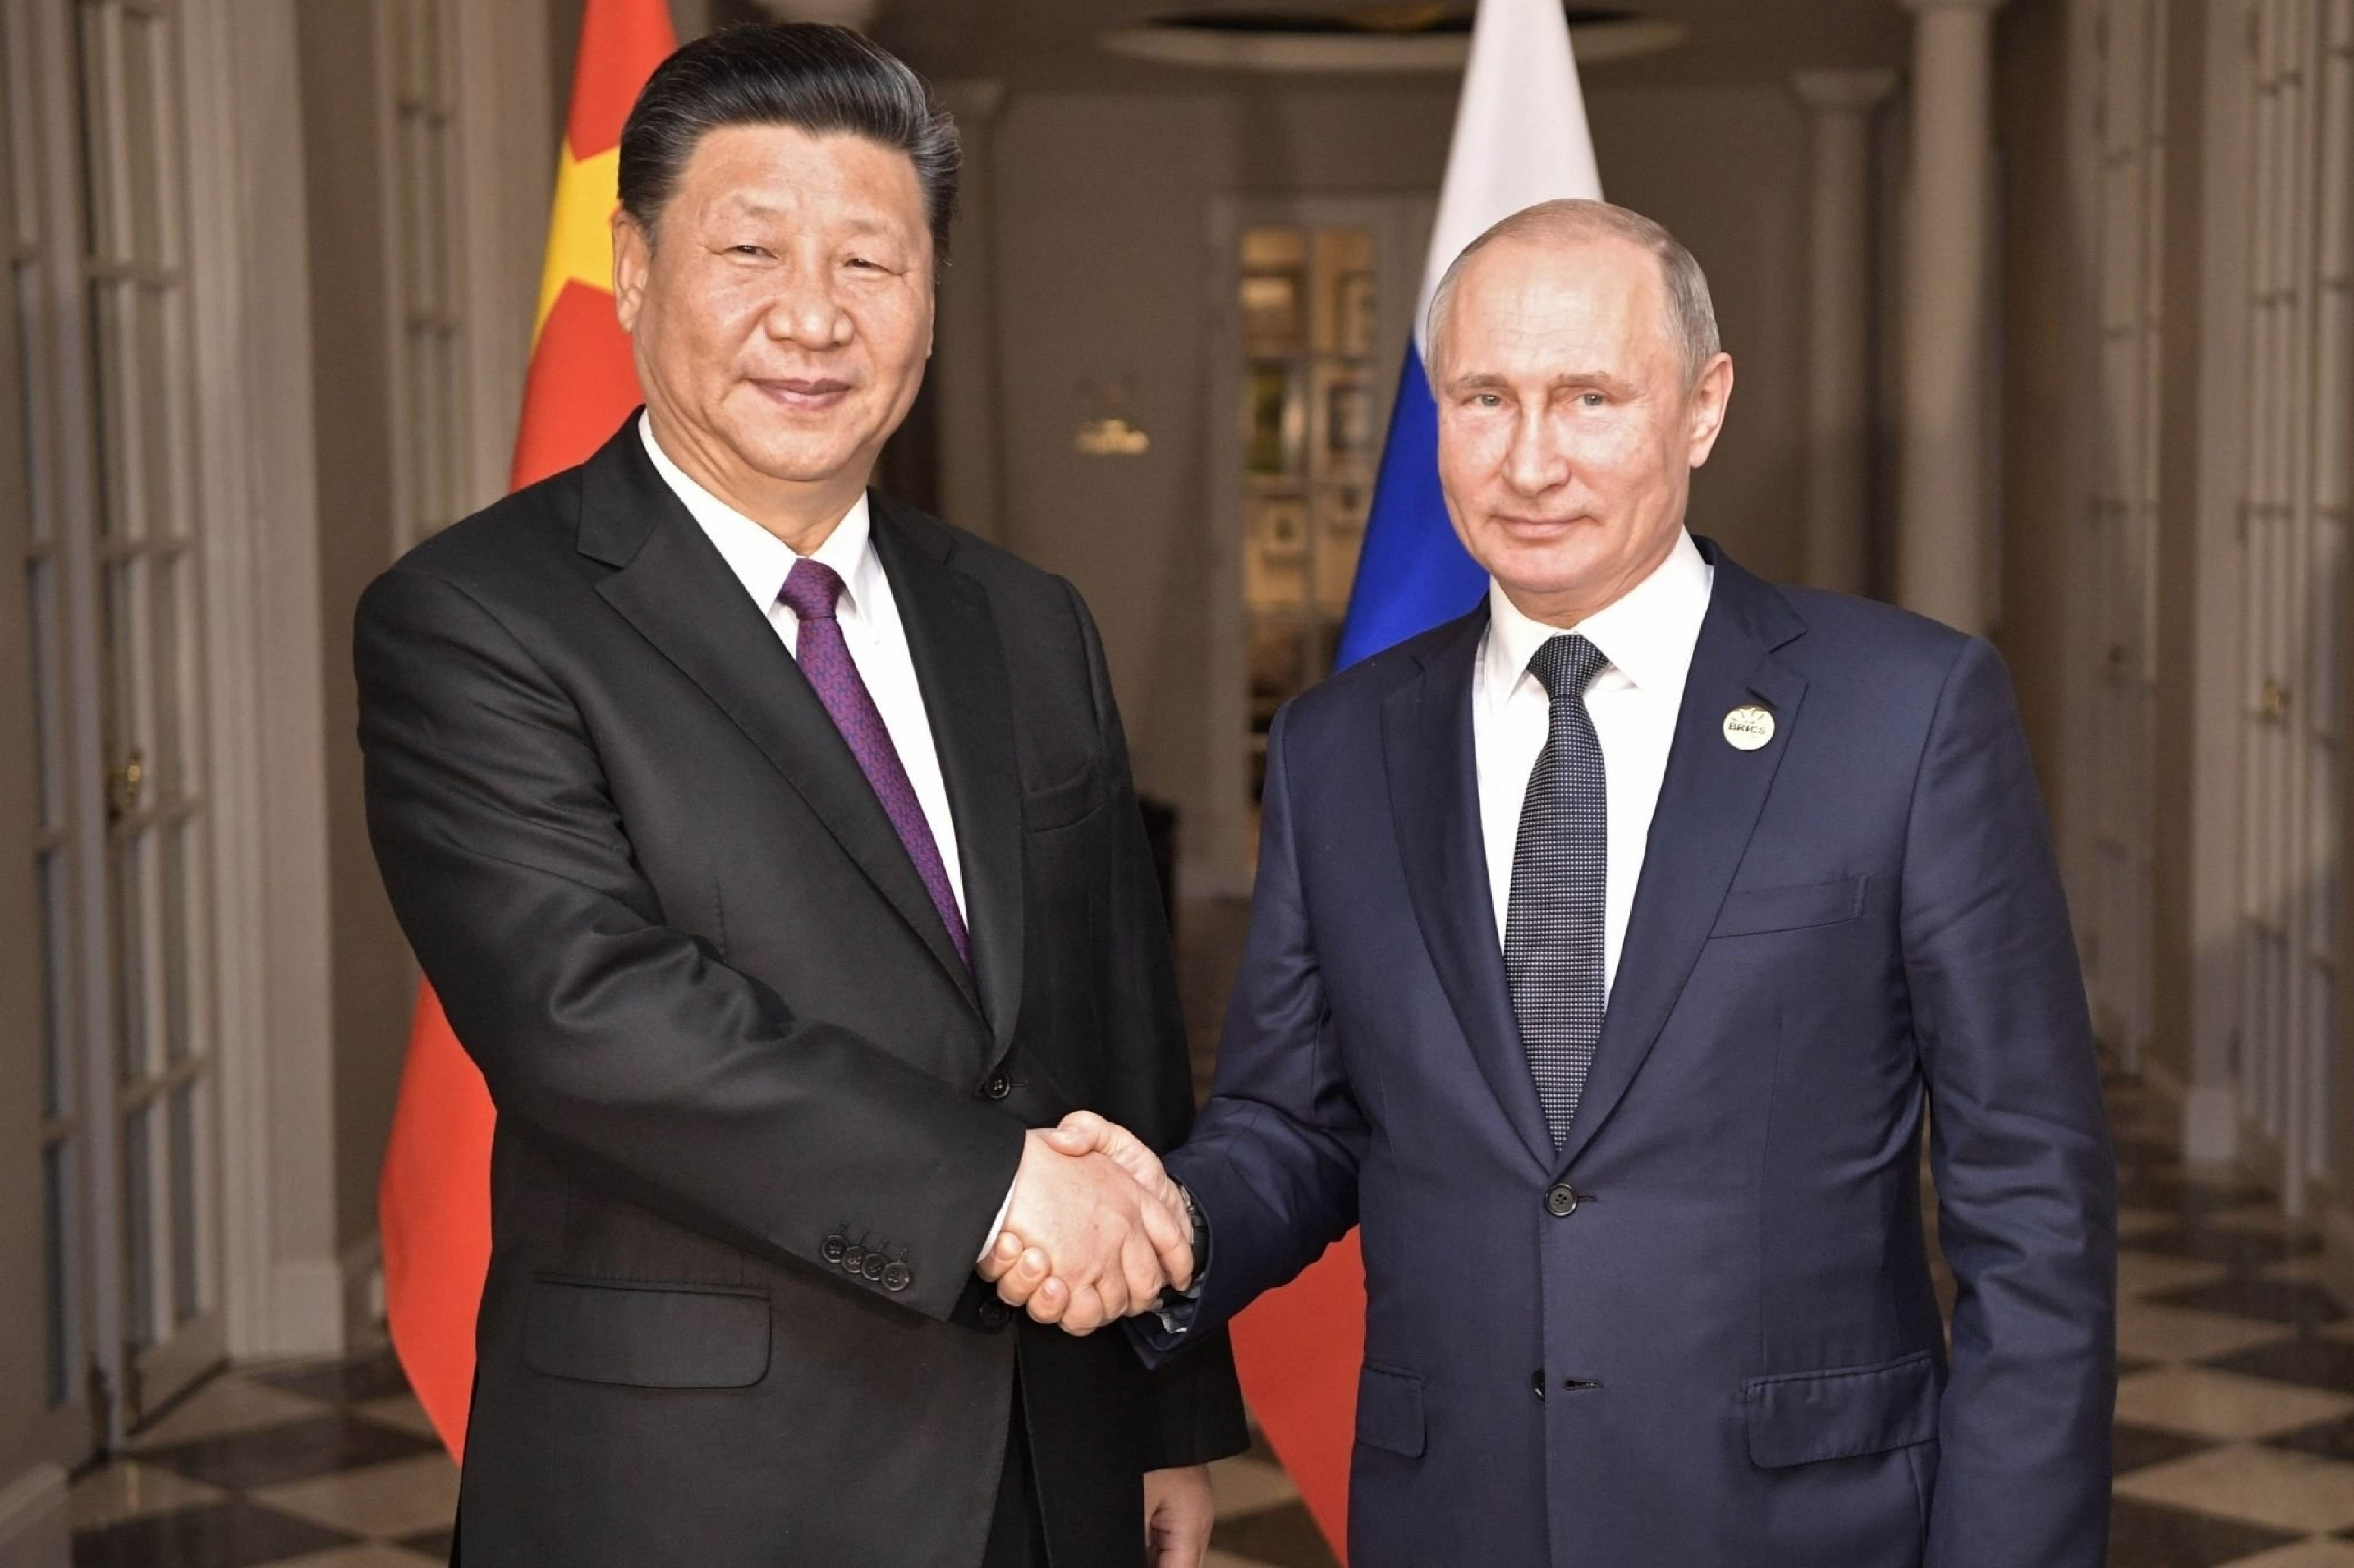 President Xi Jinping with Vladimir Putin